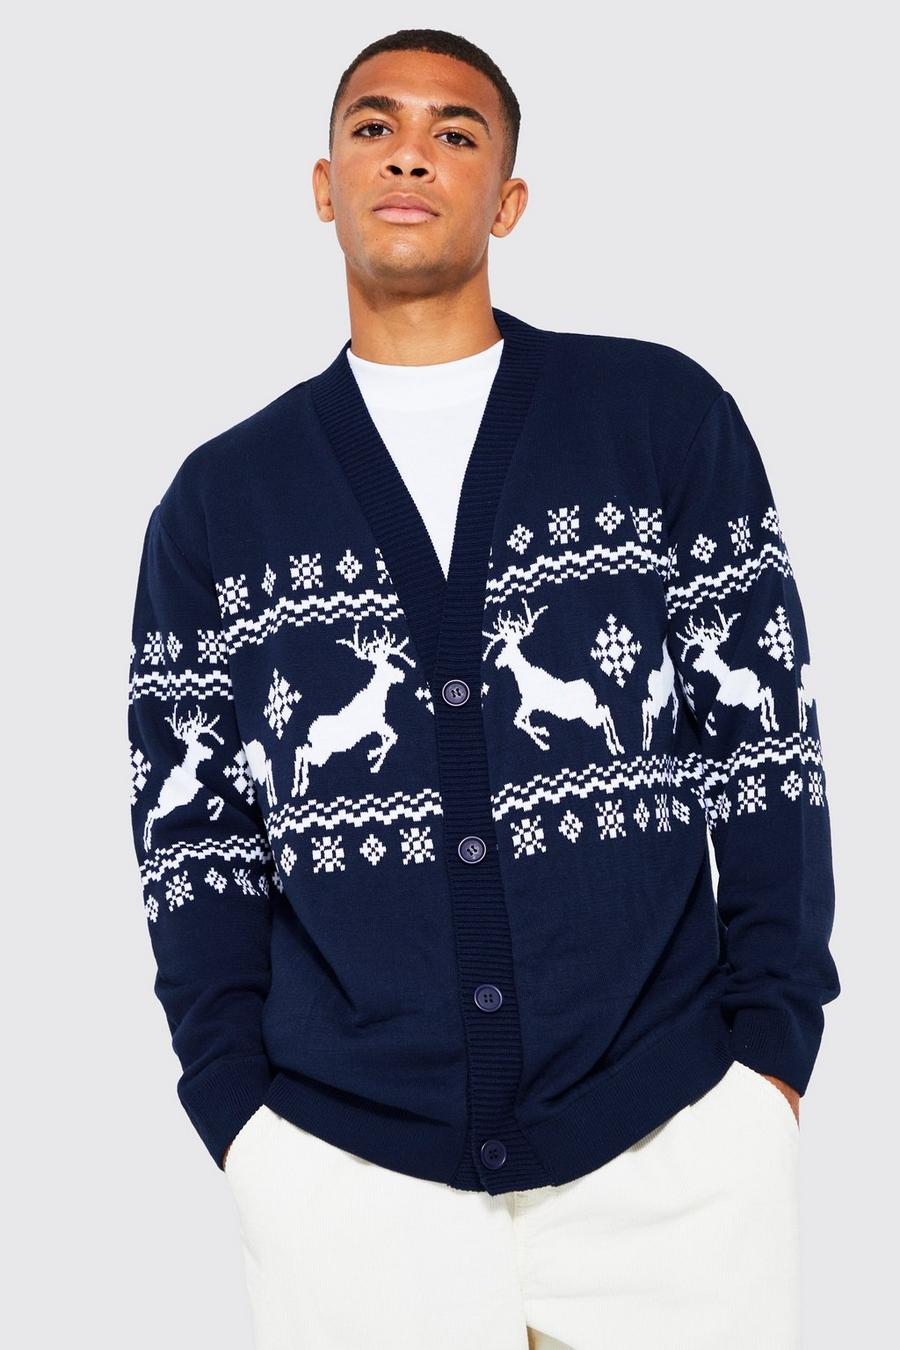 boohooMAN Mens Reindeer Fair Isle Christmas Sweater - Navy - Big & Tall